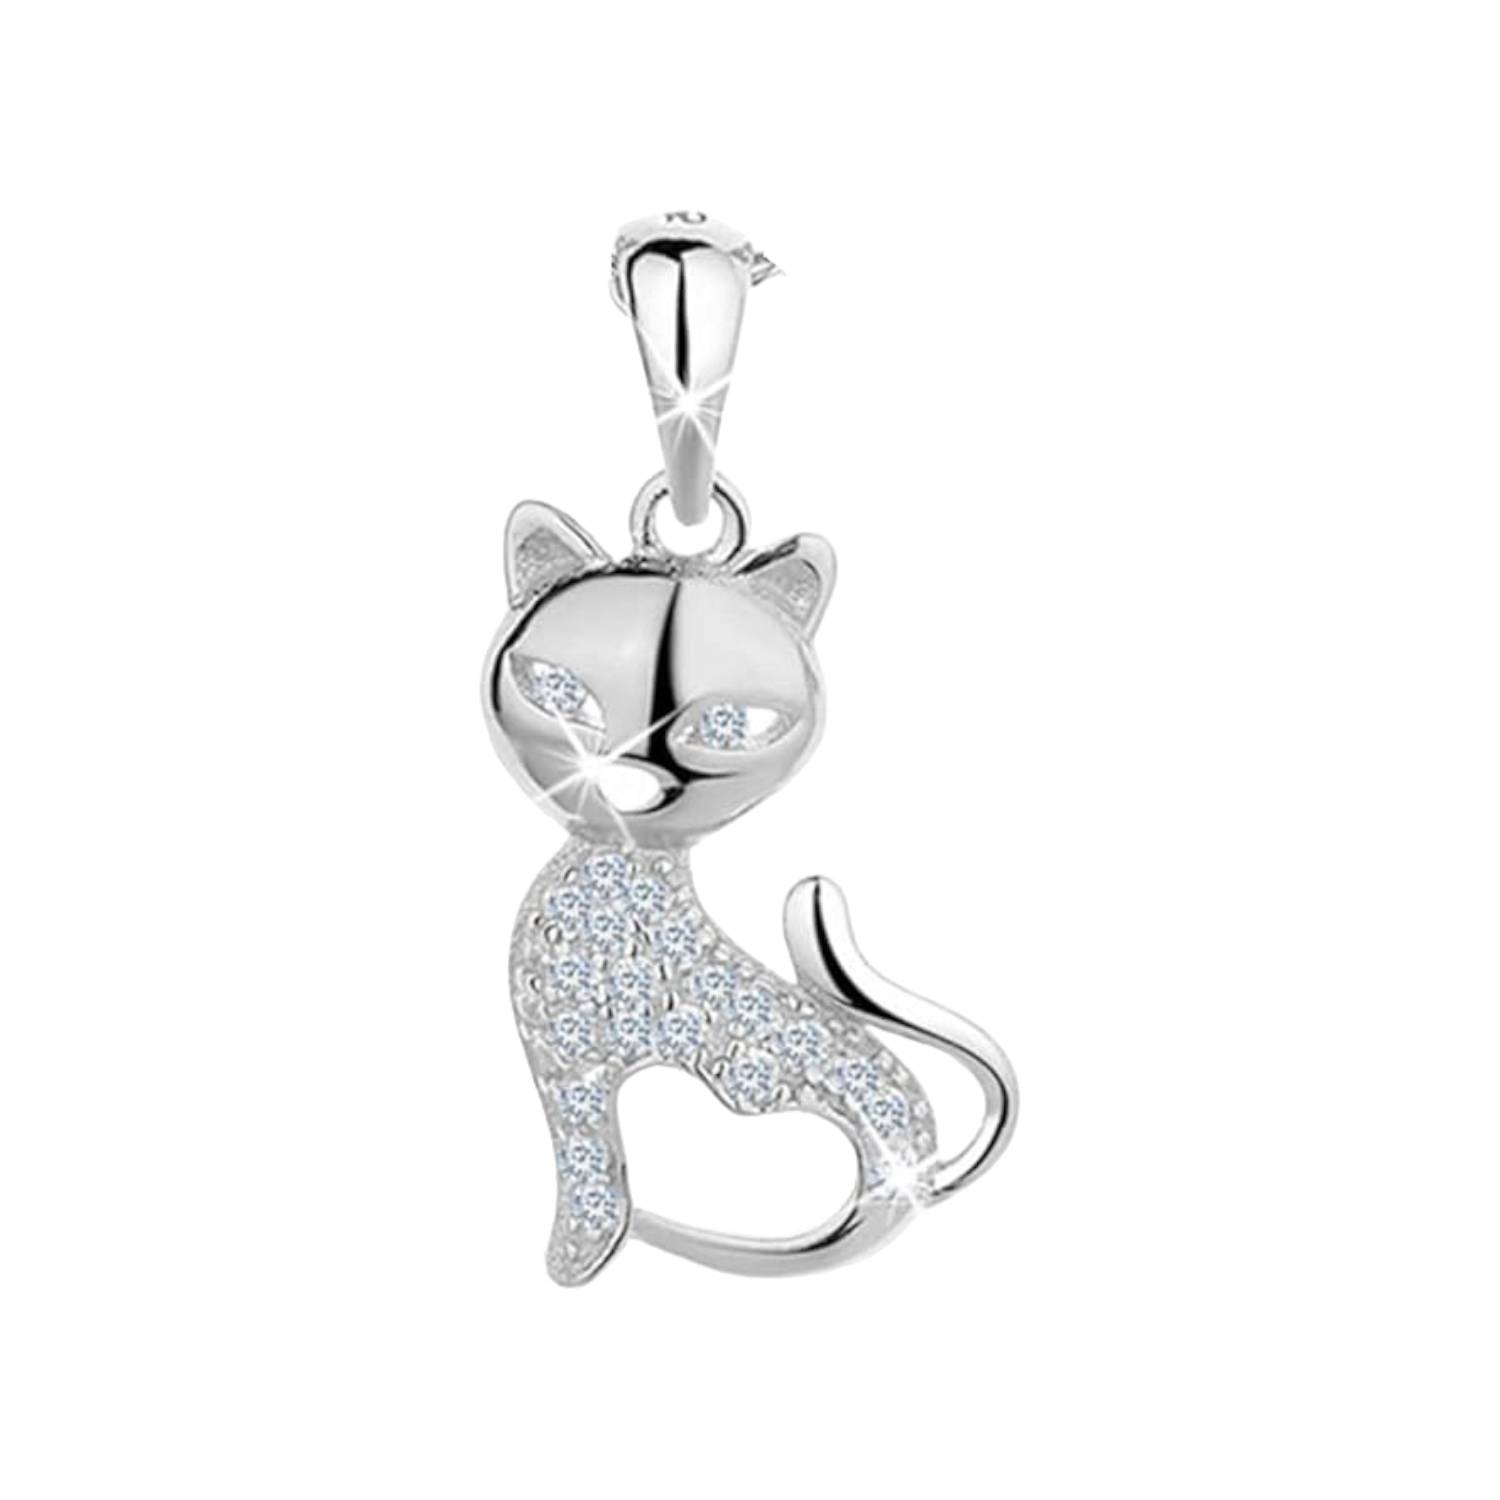 GENERICO colgante gato plata con cristales mas cadena tourbillon